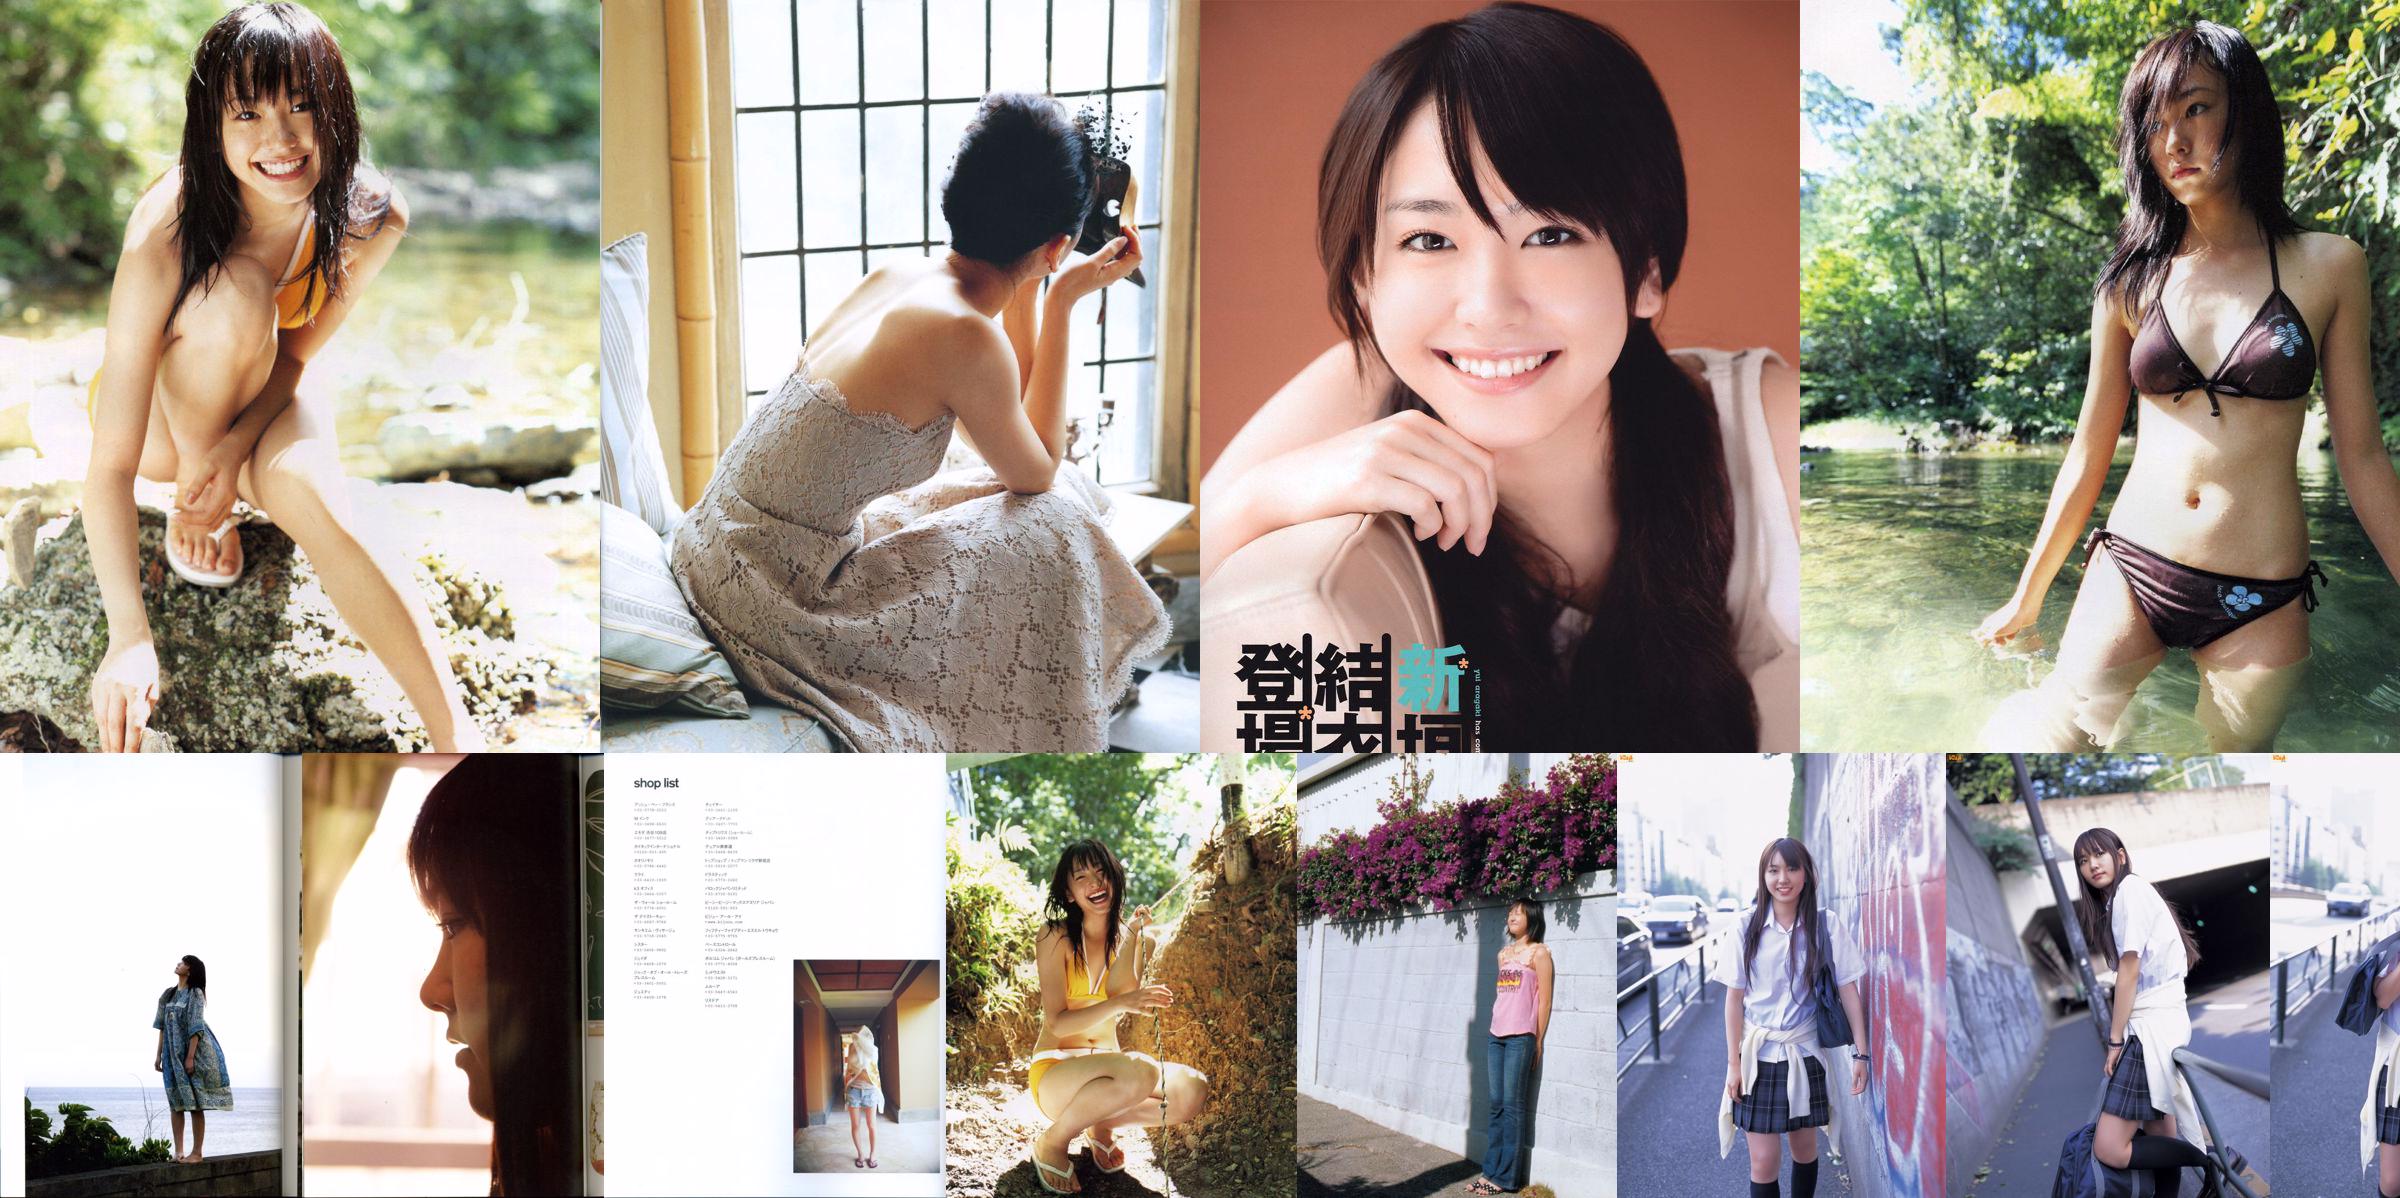 Yui Aragaki "Love Department House" 愛するマドリ No.0c57ea Page 1